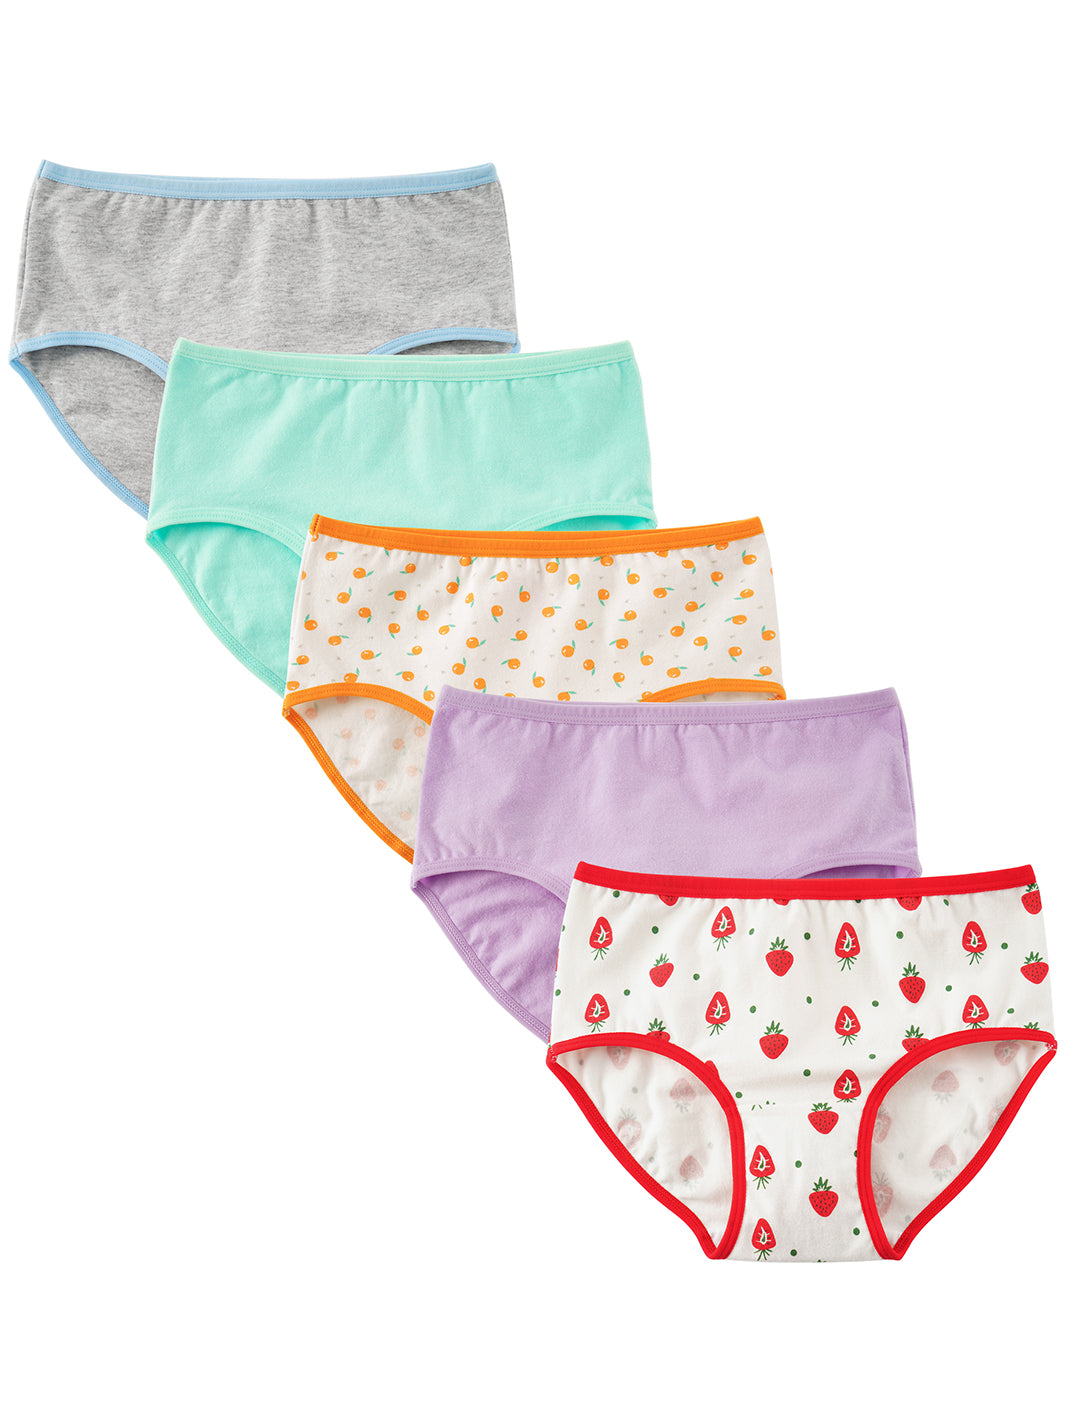 Girls Toddler Training Underwear 4-14 Years 5 Pack